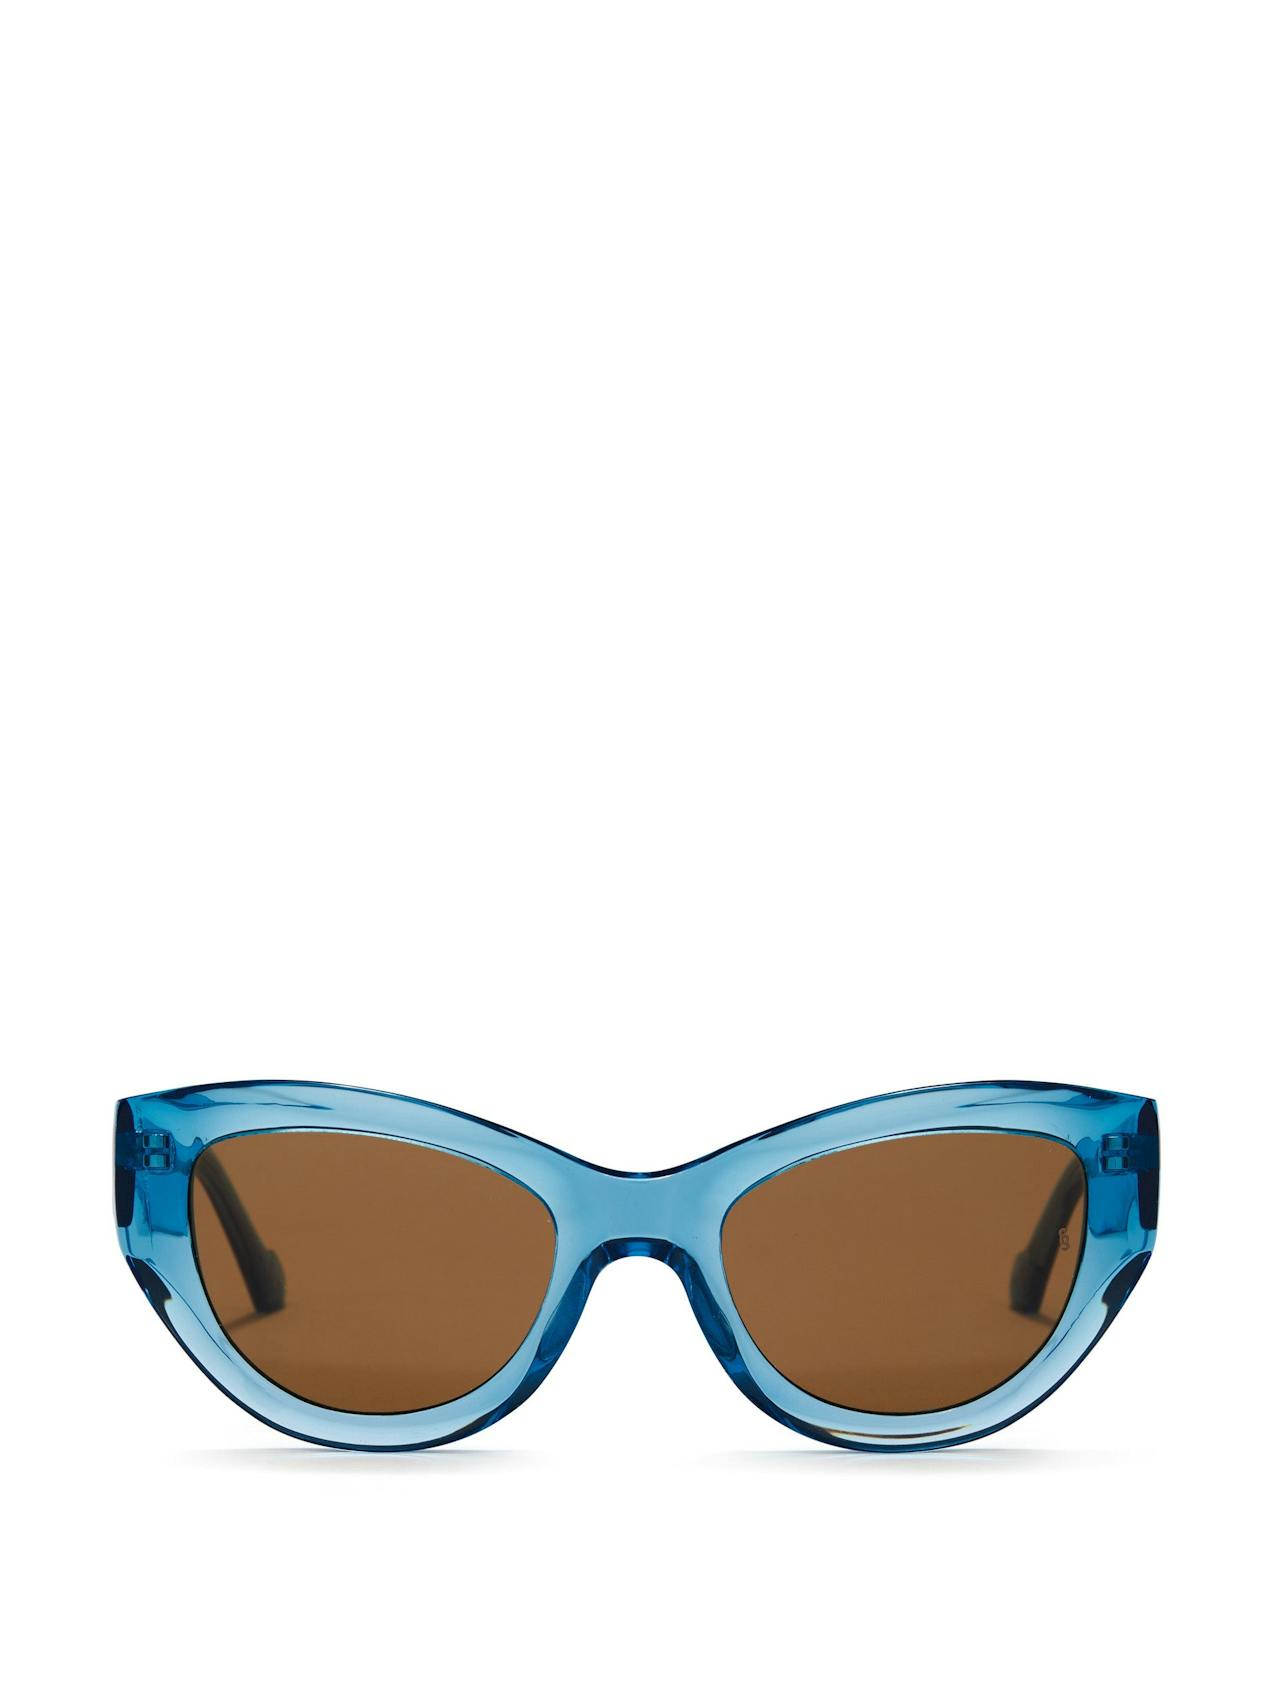 Azure Harper sunglasses